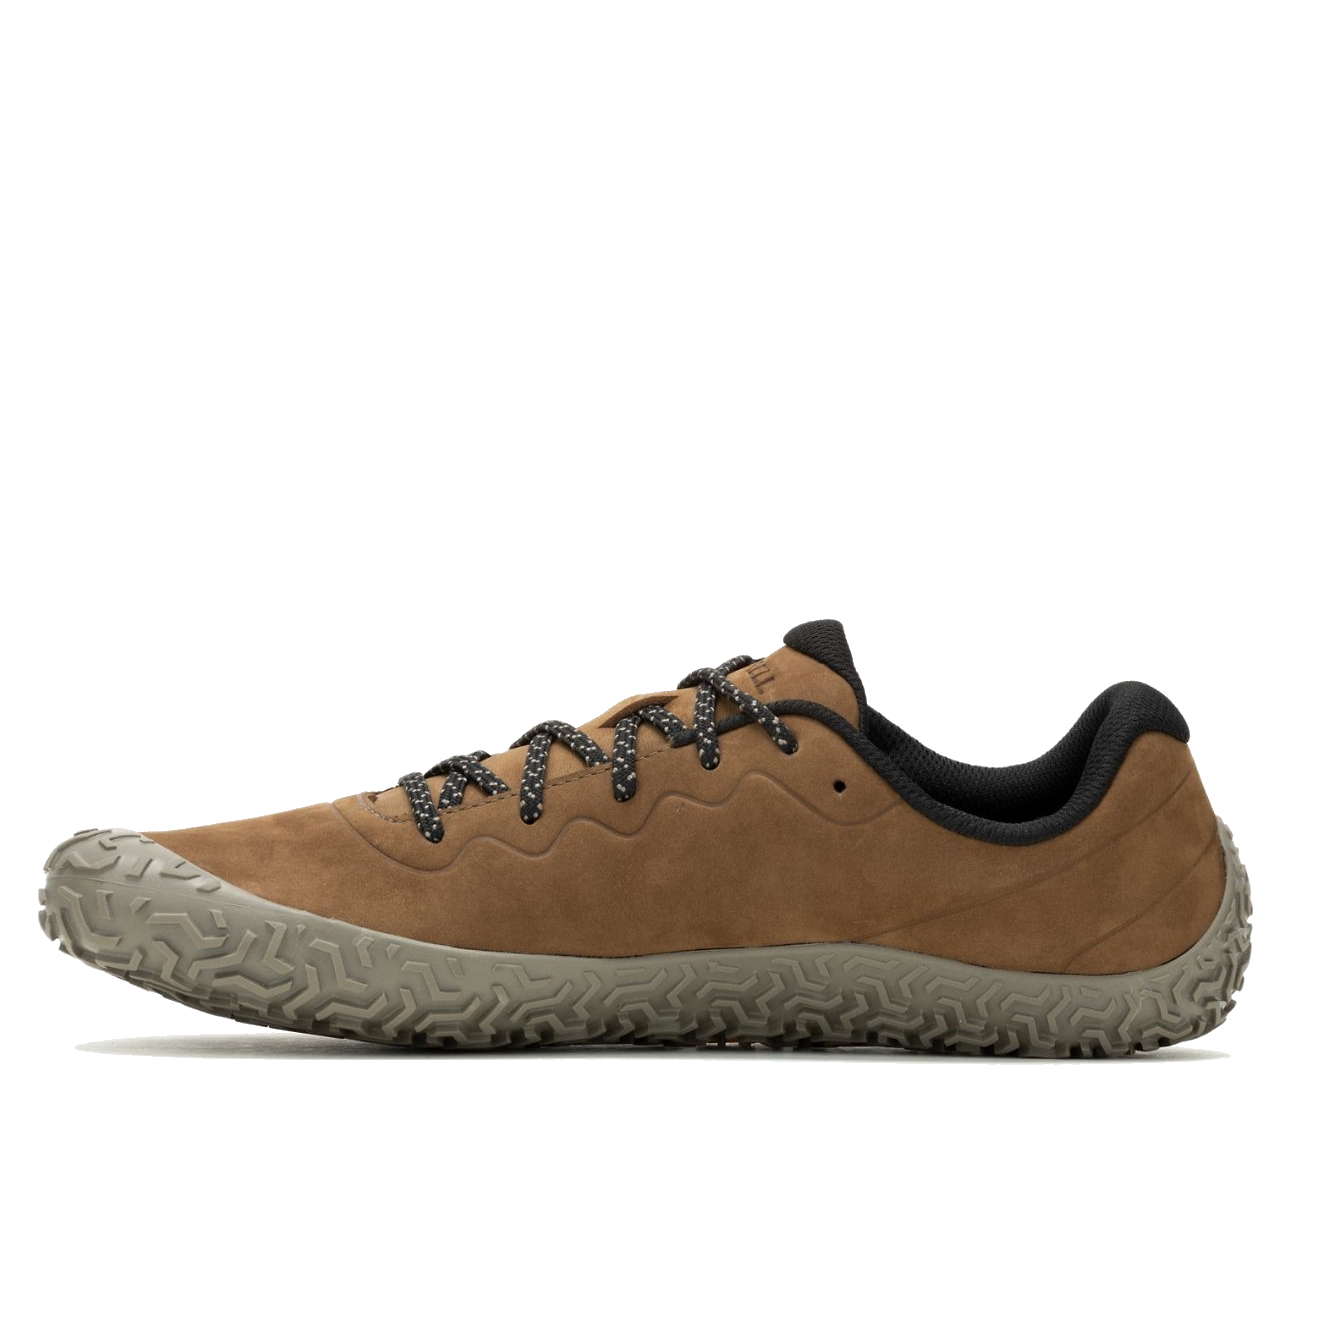 naBOSo – MERRELL VAPOR GLOVE LTR 6 W Marron – Merrell – Sneakers – Women –  Experience the Comfort of Barefoot Shoes